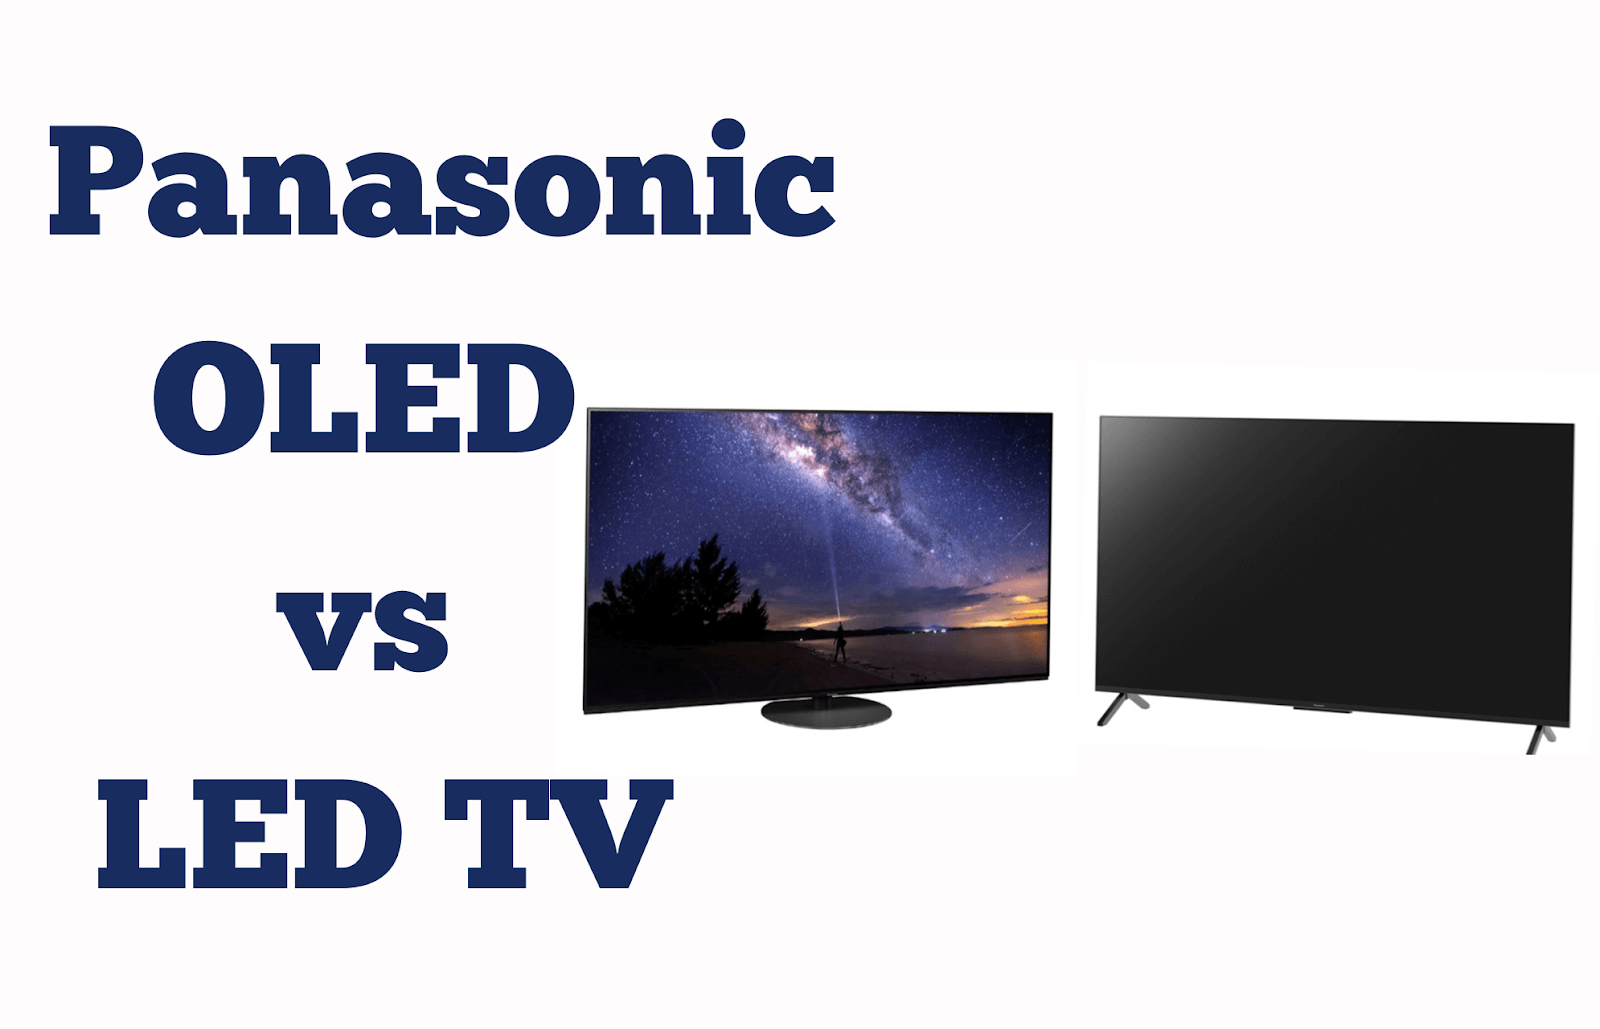 Panasonic OLED vs LED TV